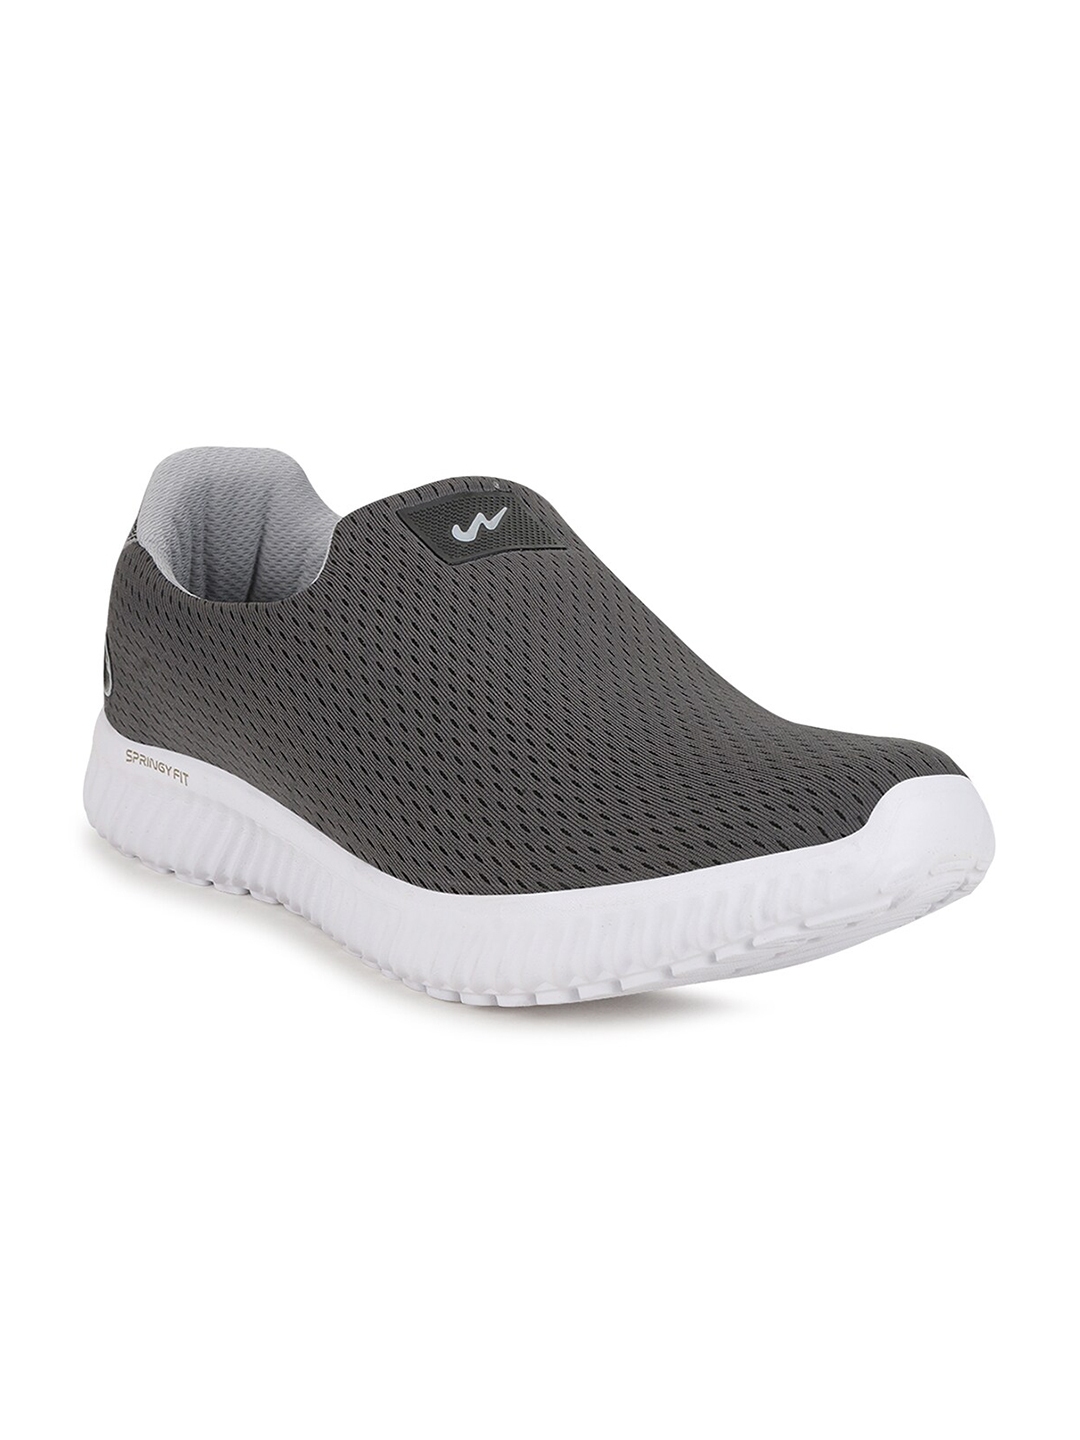 Buy Campus Men Grey Mesh Walking Shoes - Sports Shoes for Men 17221278 ...